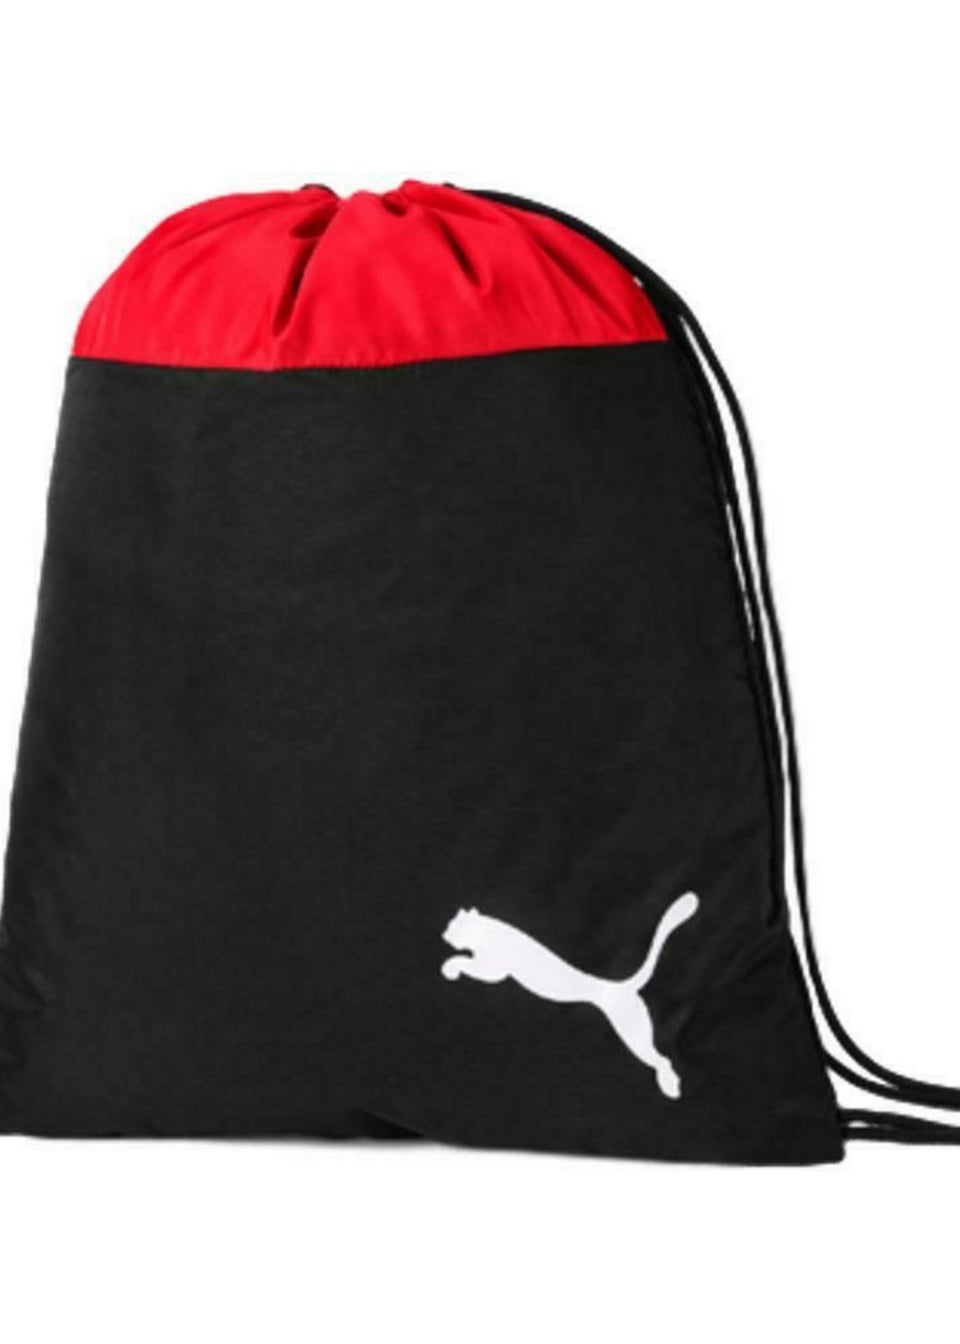 Puma Black/Red Team Goal 23 Drawstring Bag